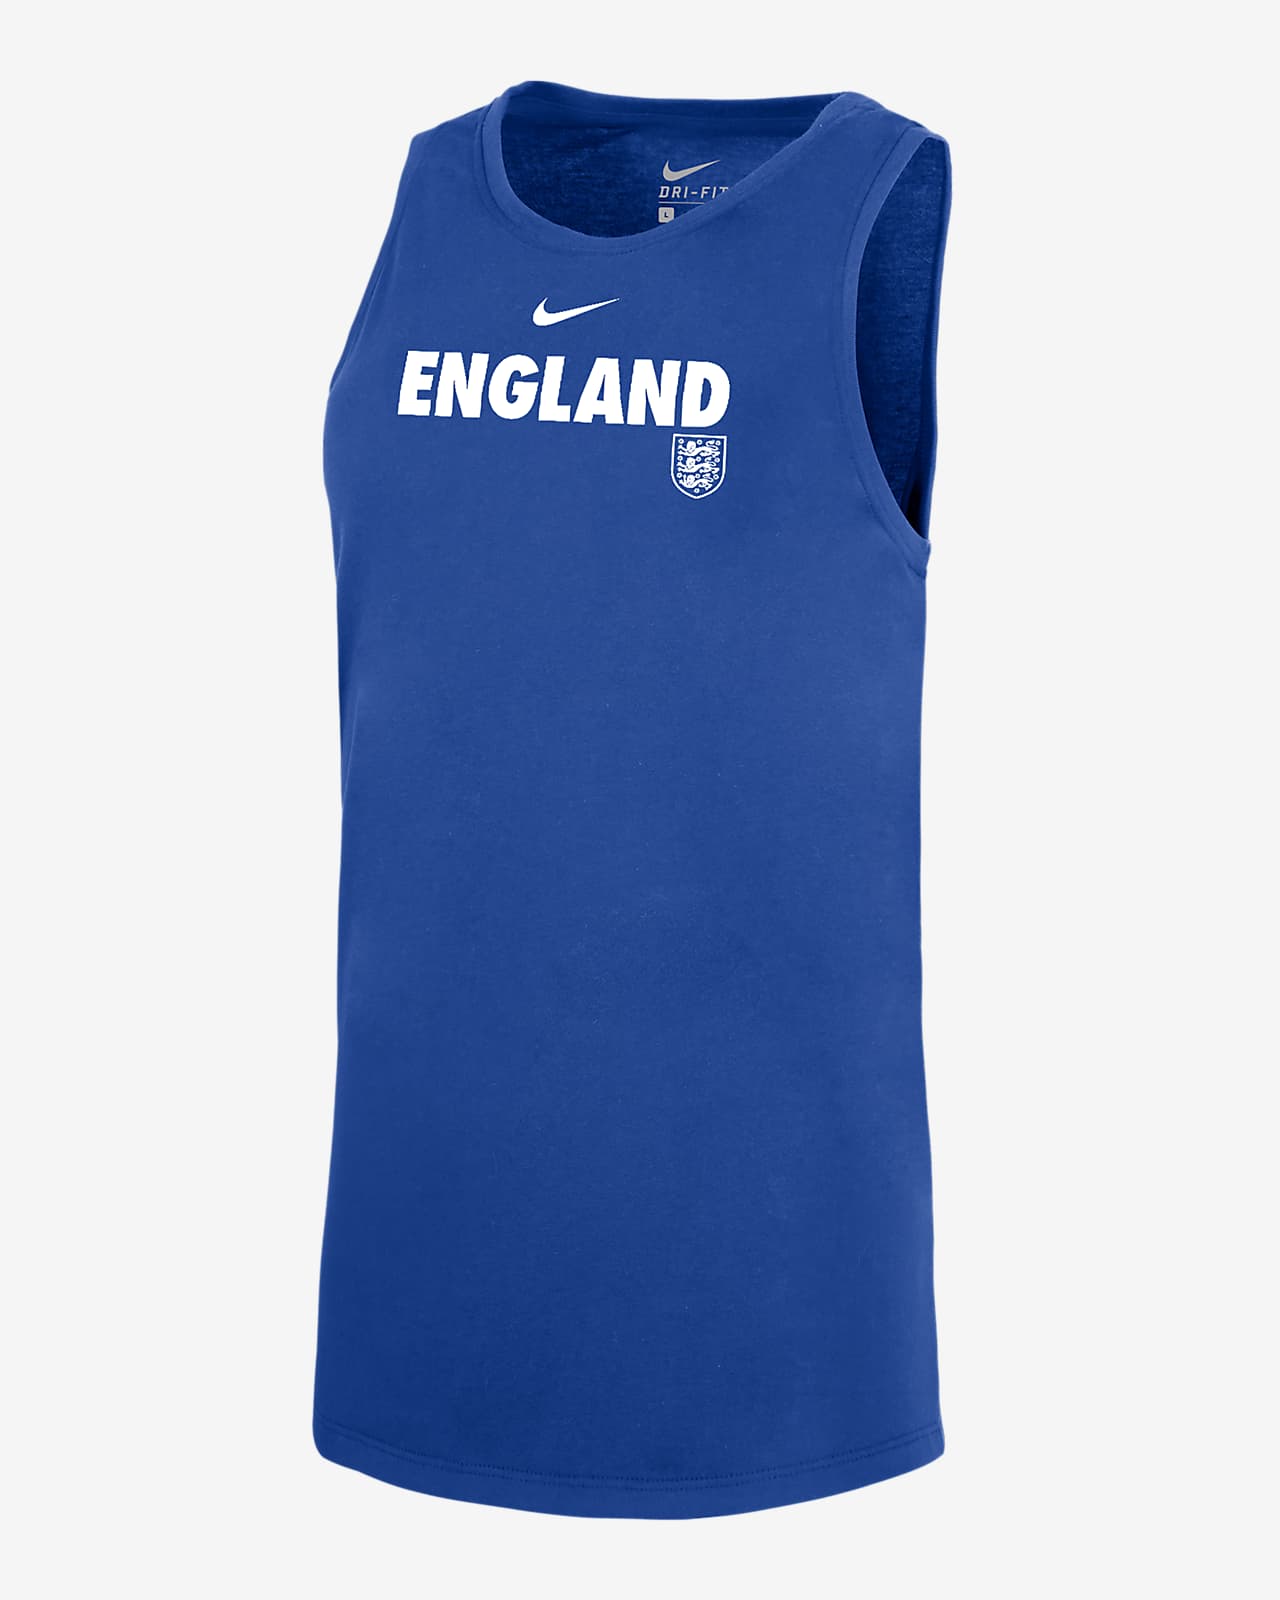 England Women's Nike Dri-FIT Soccer Tank Top